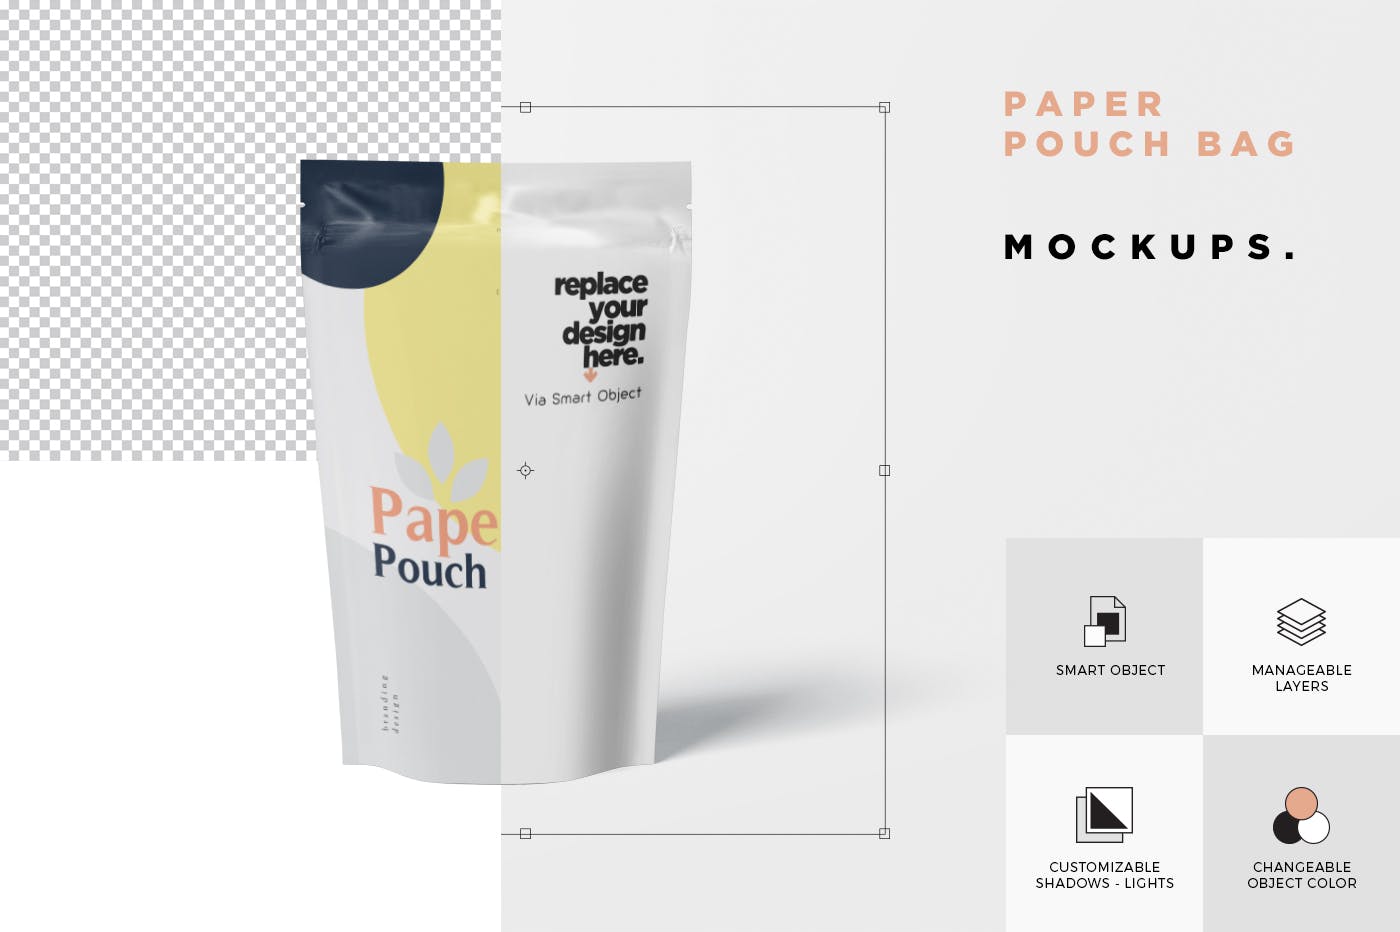 食品自封袋包装设计效果图素材库精选 Paper Pouch Bag Mockup – Large Size插图(5)